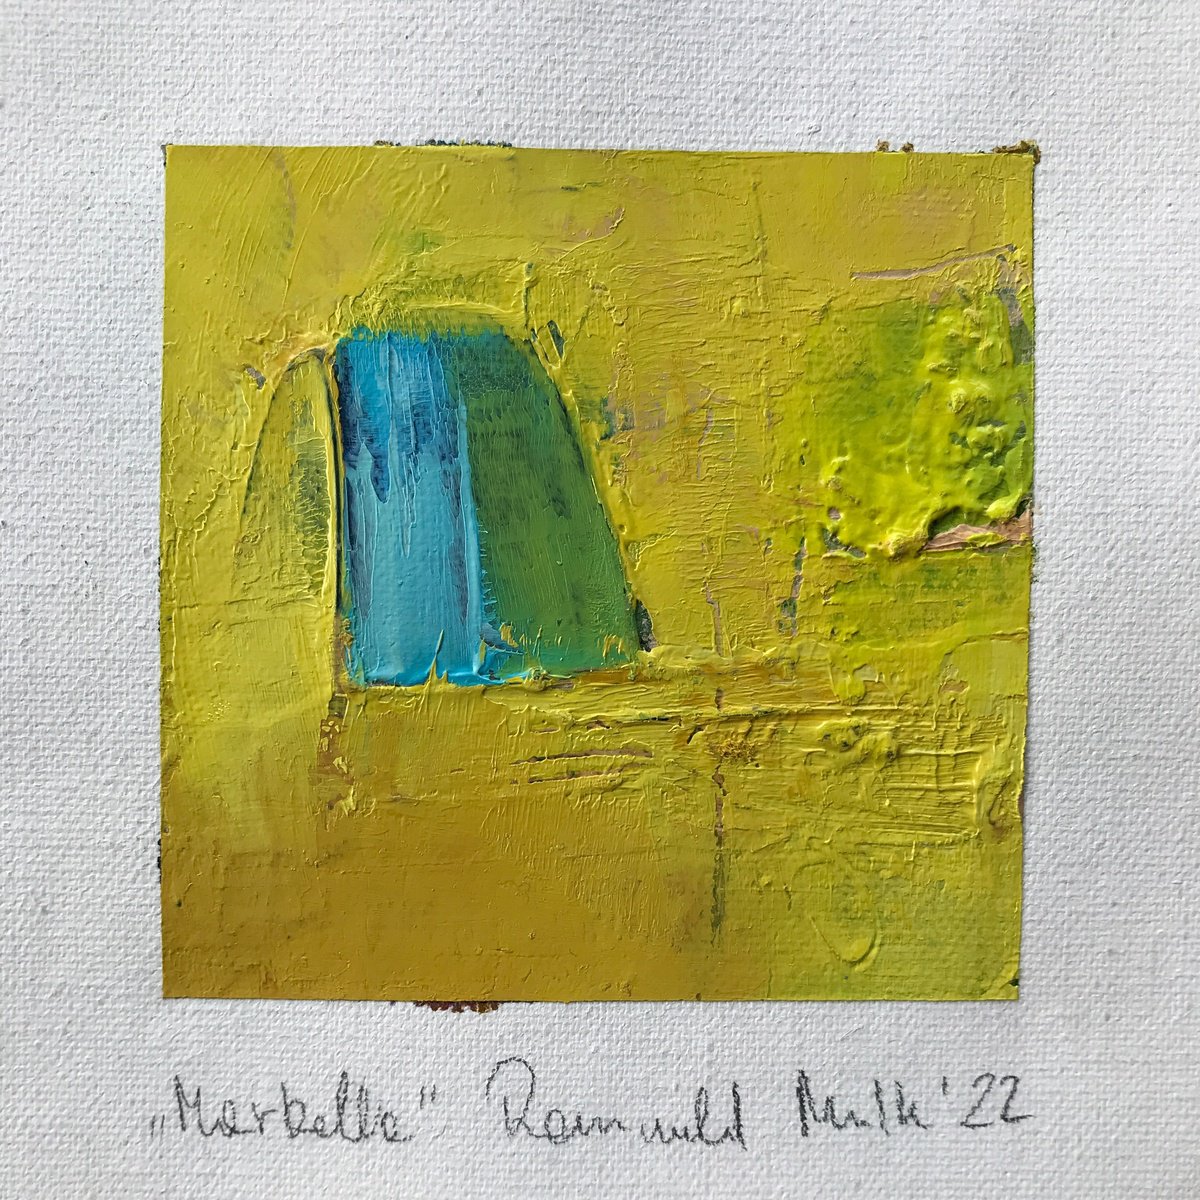 Marbella by Romuald Mulk Musiolik